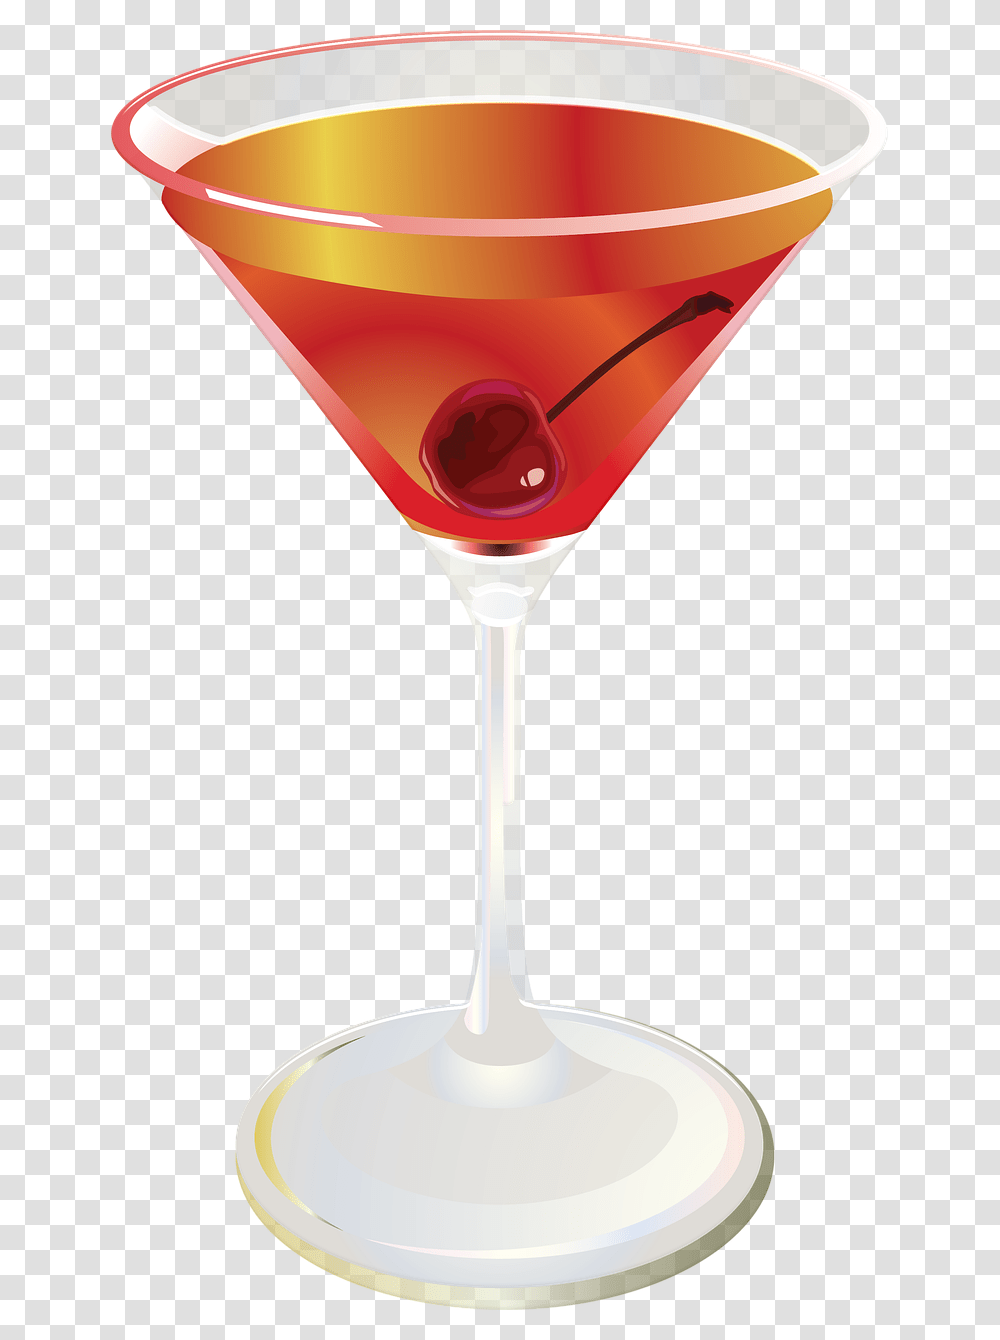 Martini Glass, Cocktail, Alcohol, Beverage, Drink Transparent Png